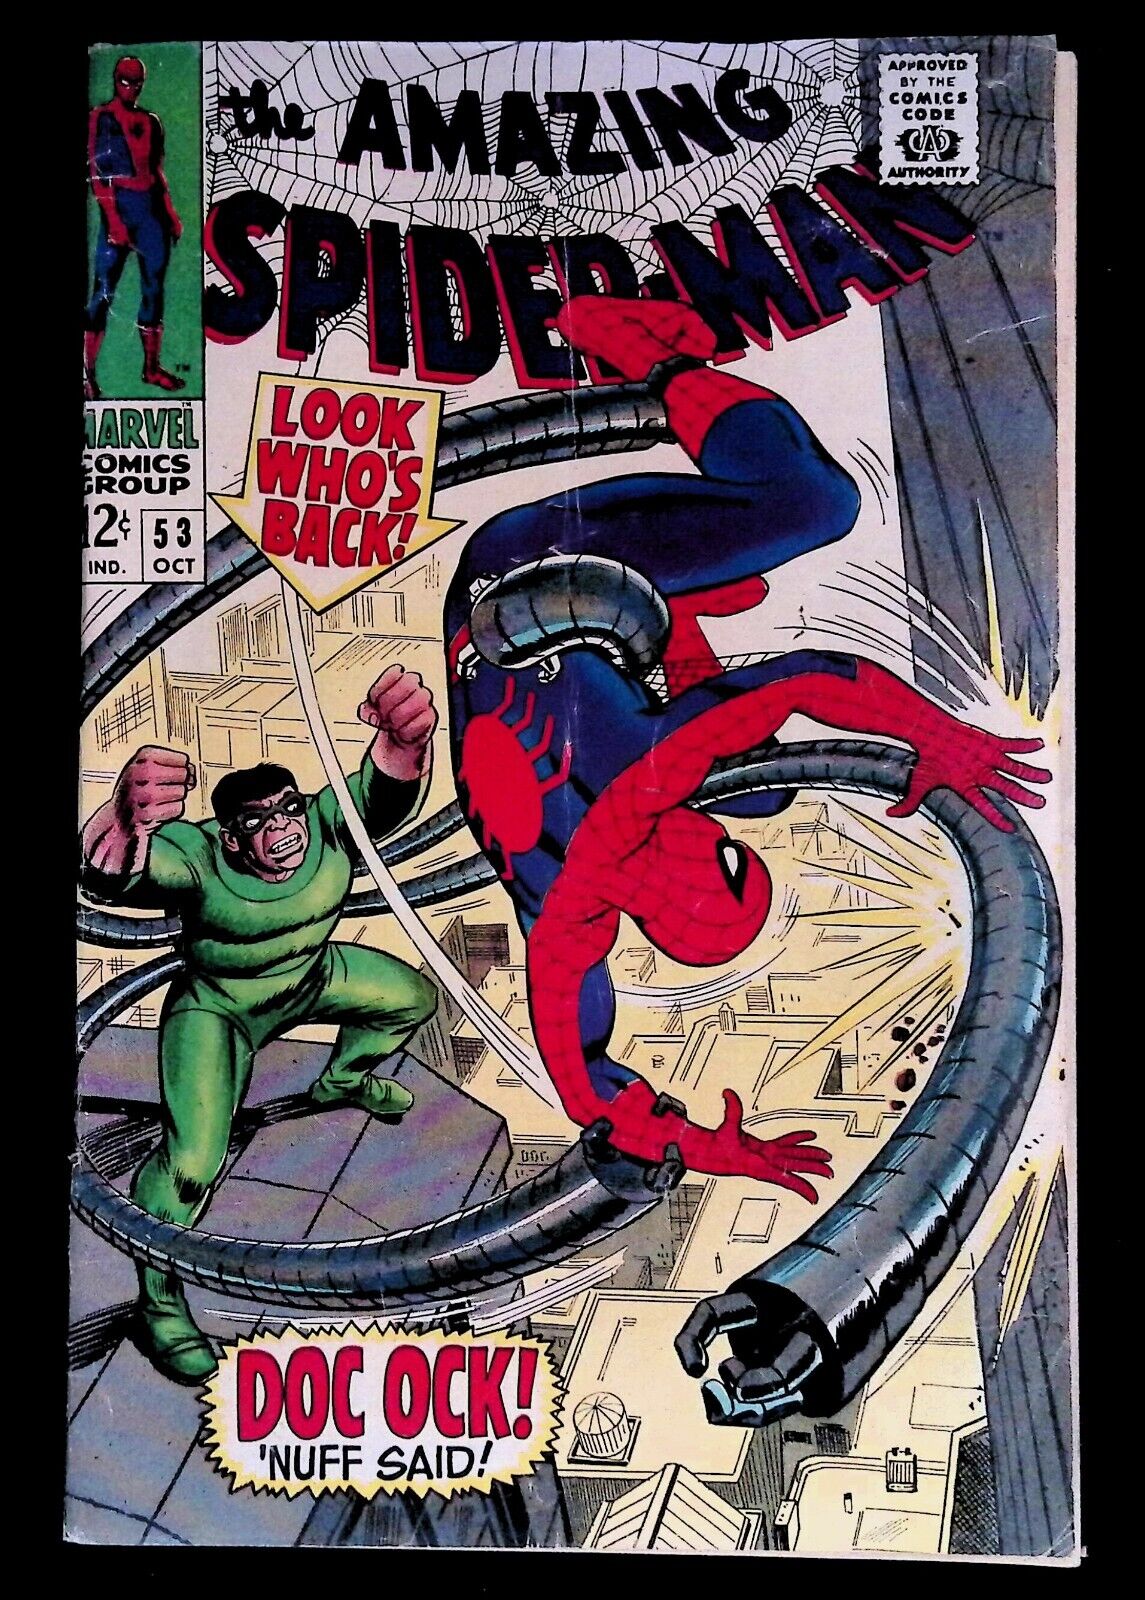 The Amazing Spider-Man #53 (Marvel Comics October 1967)